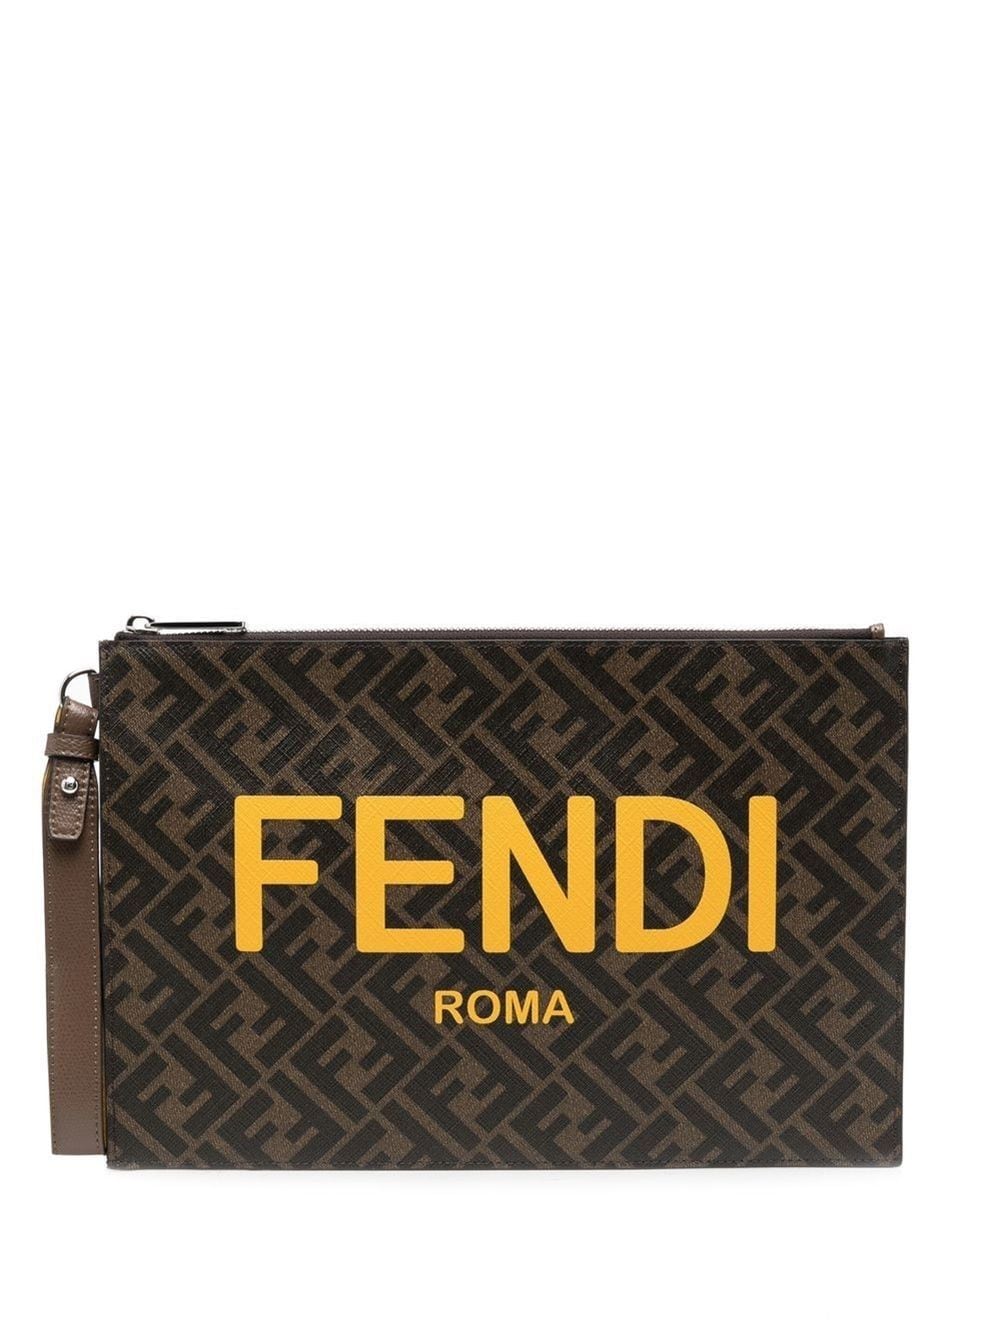 Fendi Ff Envelope Clutch Bag in Black